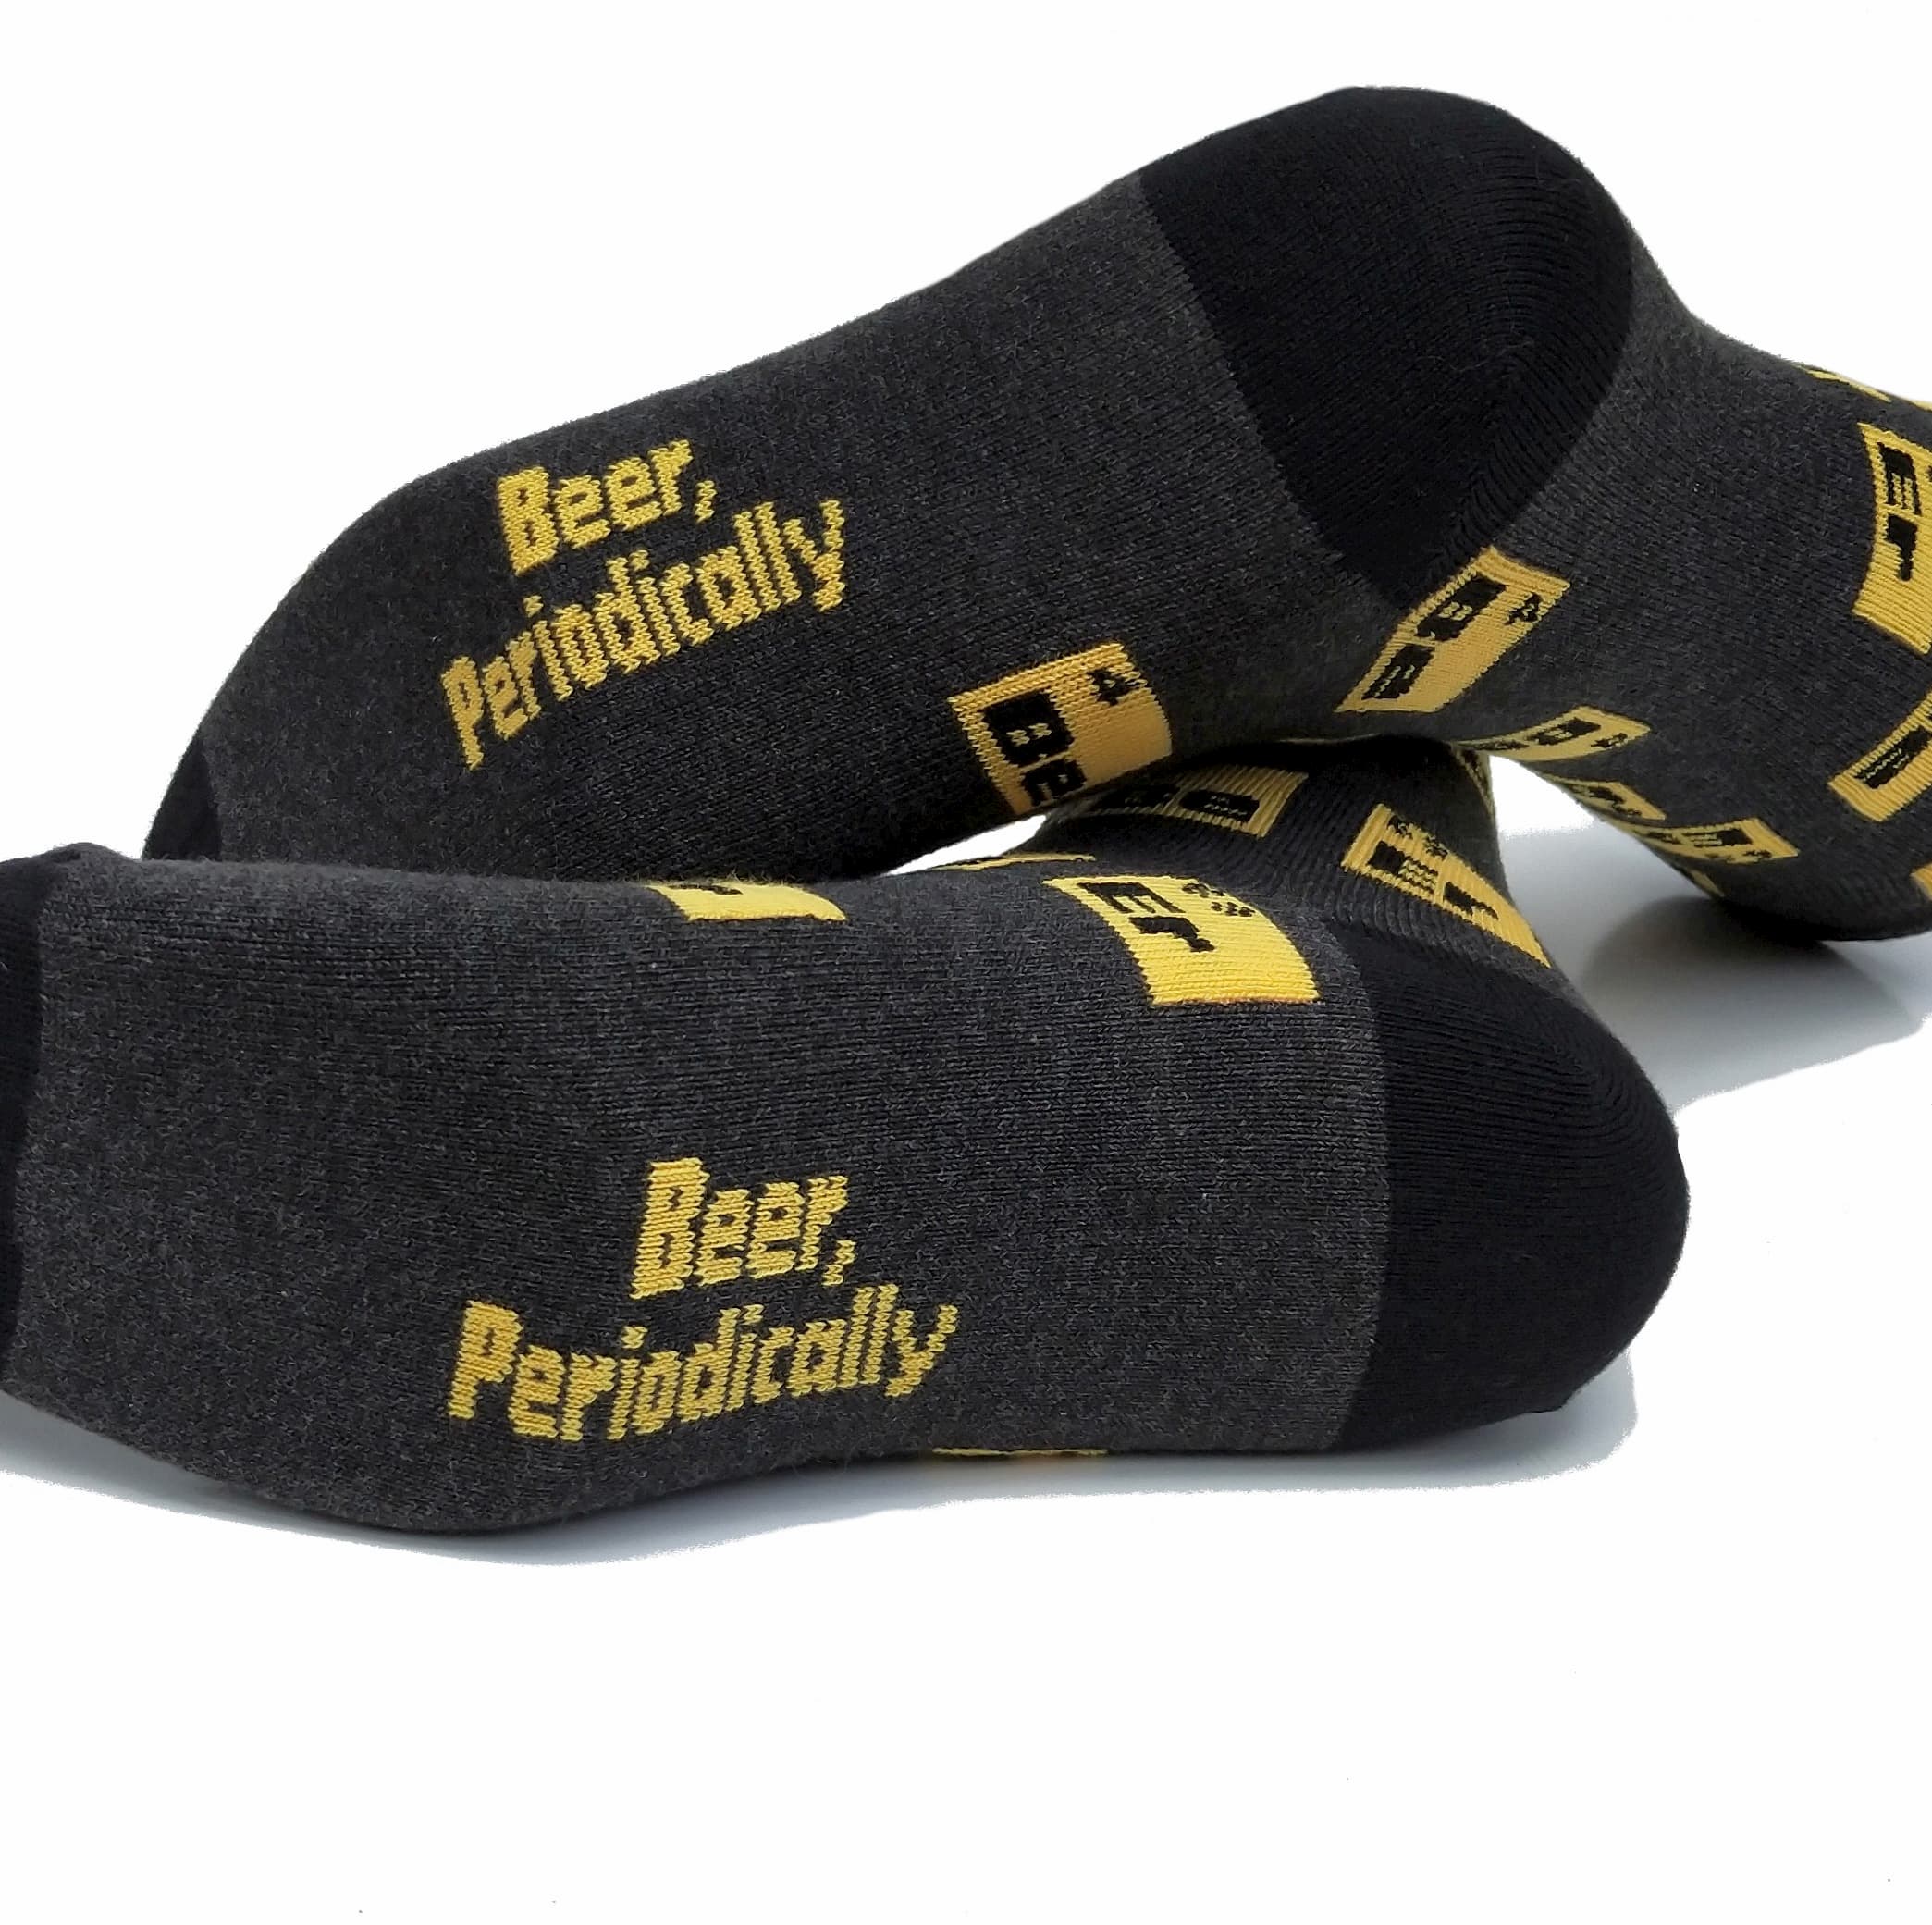 Beer Periodically Mens Crew Sock - The Sockery